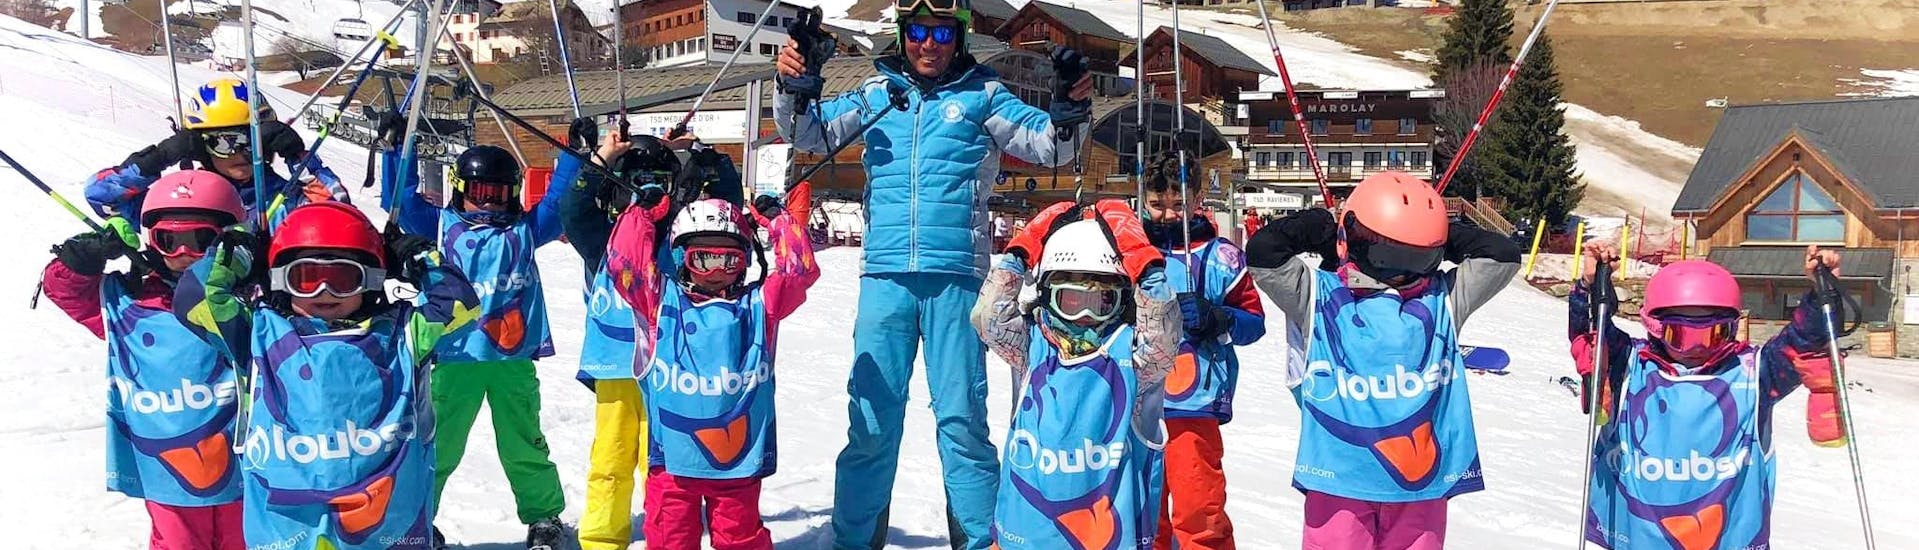 kids-ski-lessons-souris-esi-la-toussuire-hero-OK